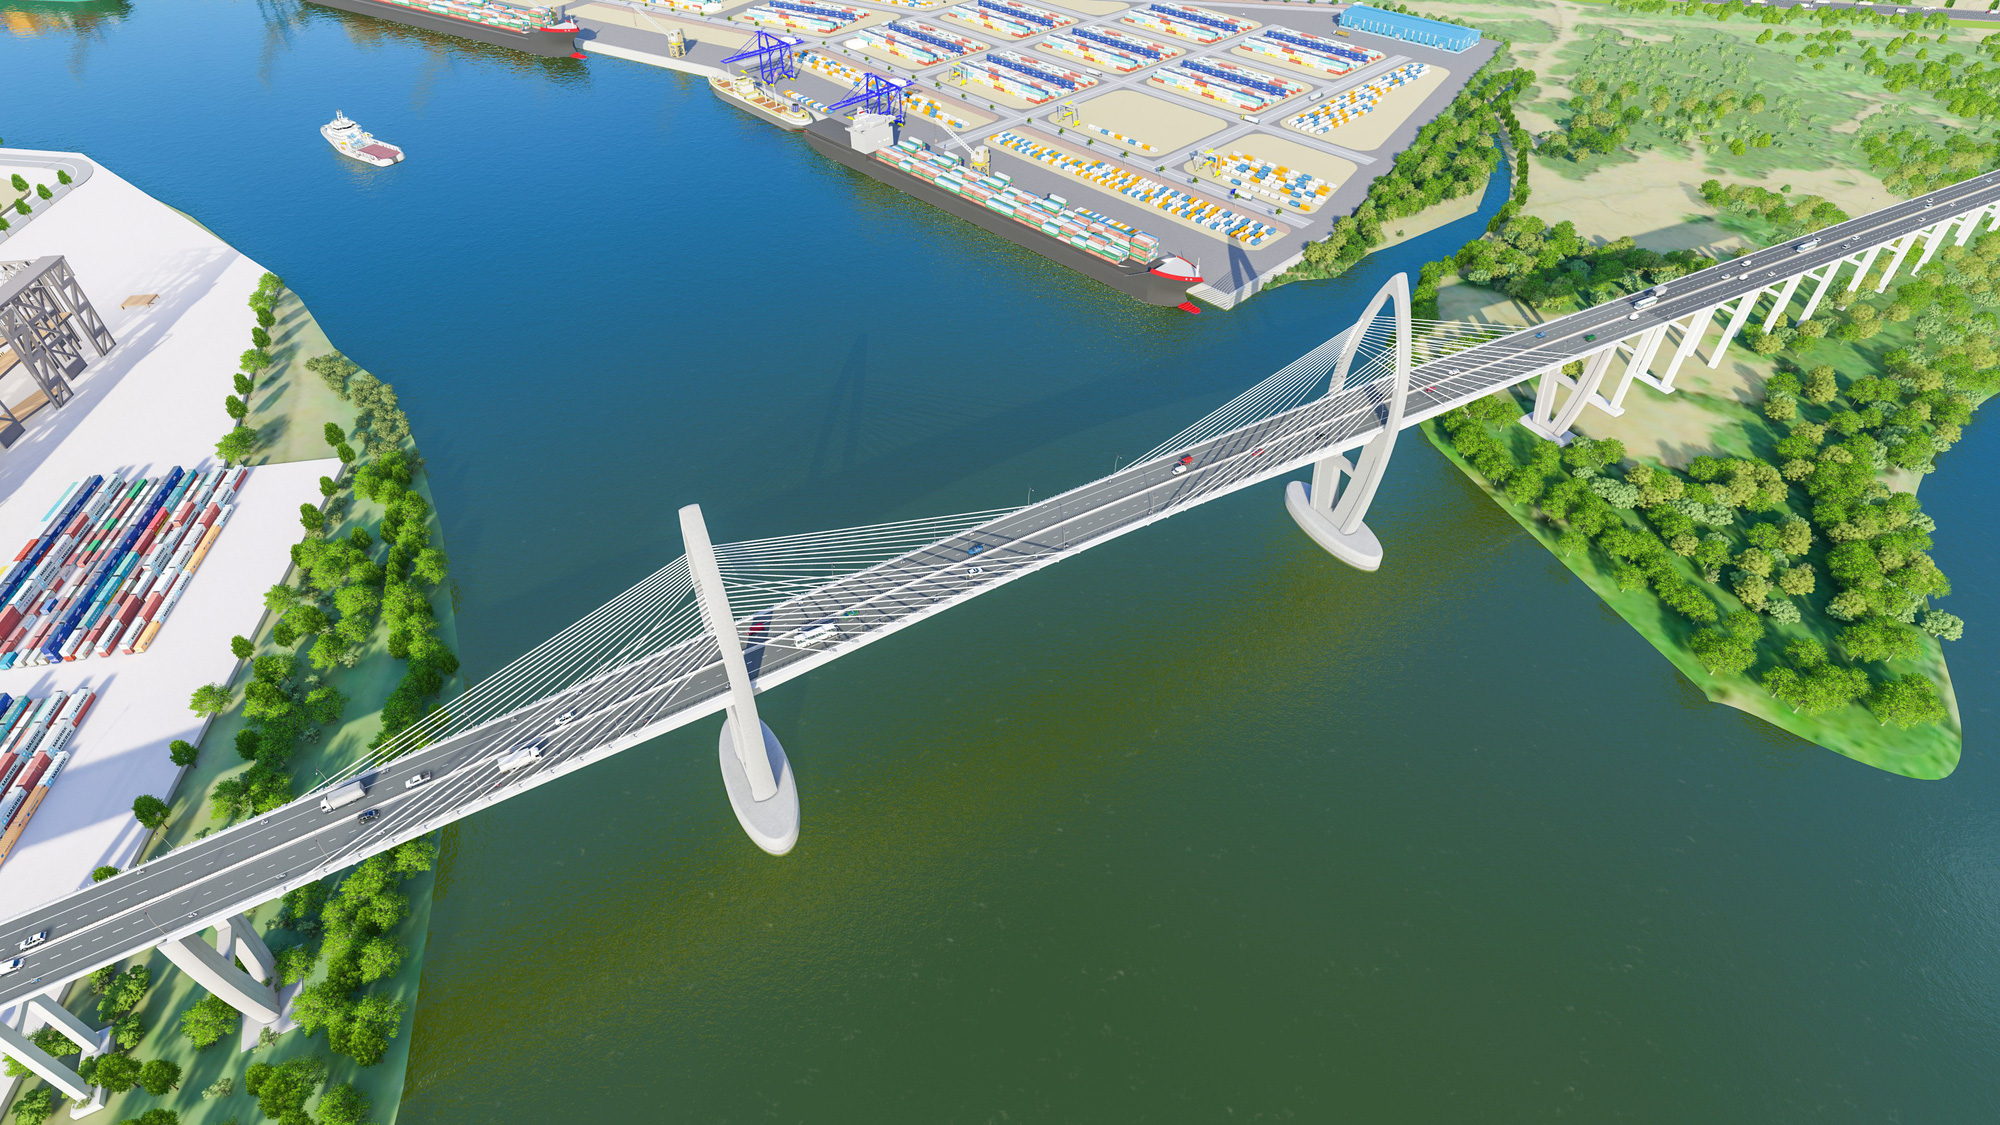 Ba Ria-Vung Tau in southern Vietnam breaks ground on $208mn bridge project